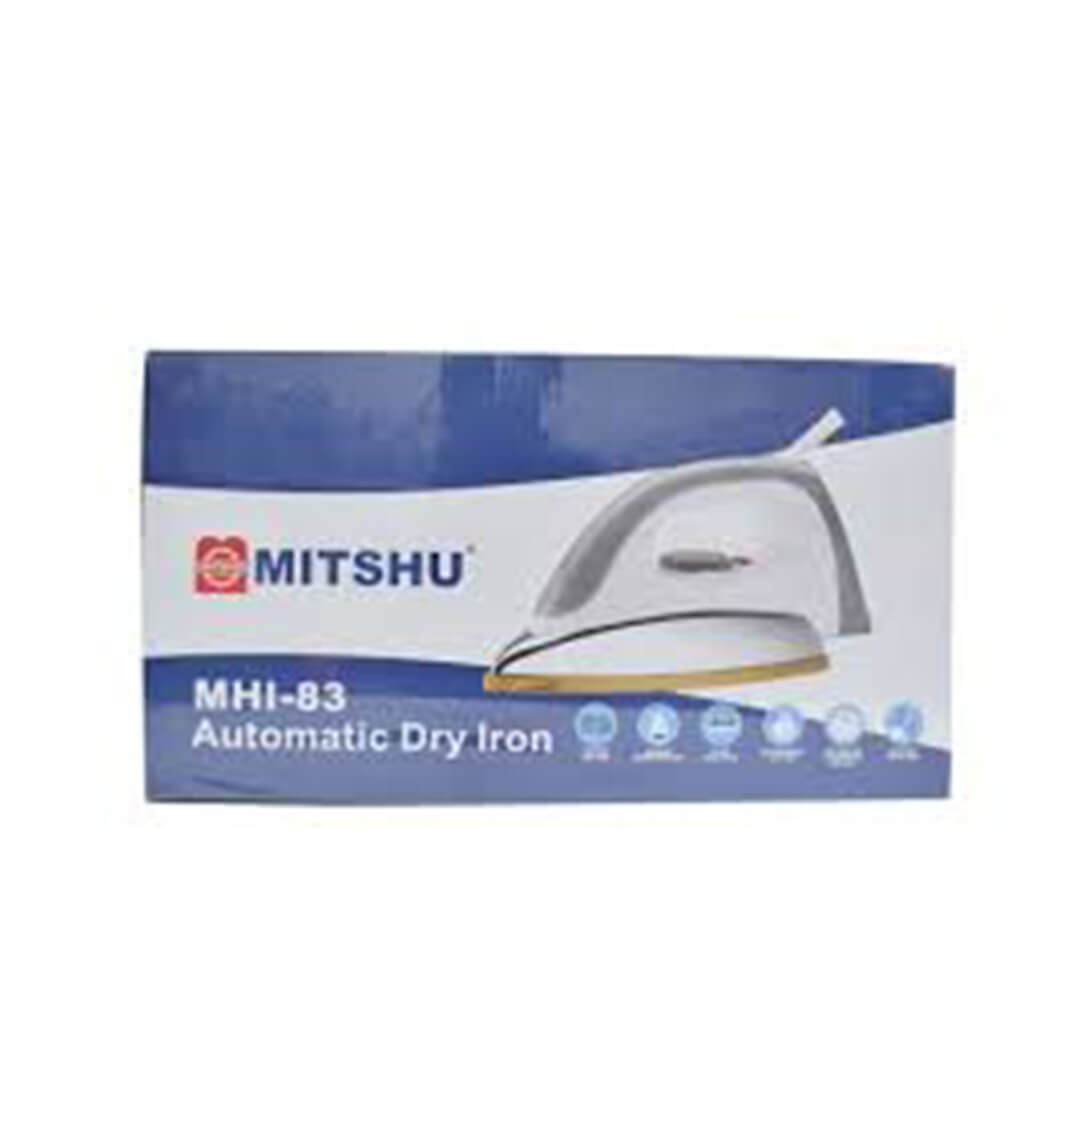 Automatic Dry Iron MHI-83 Mitshu